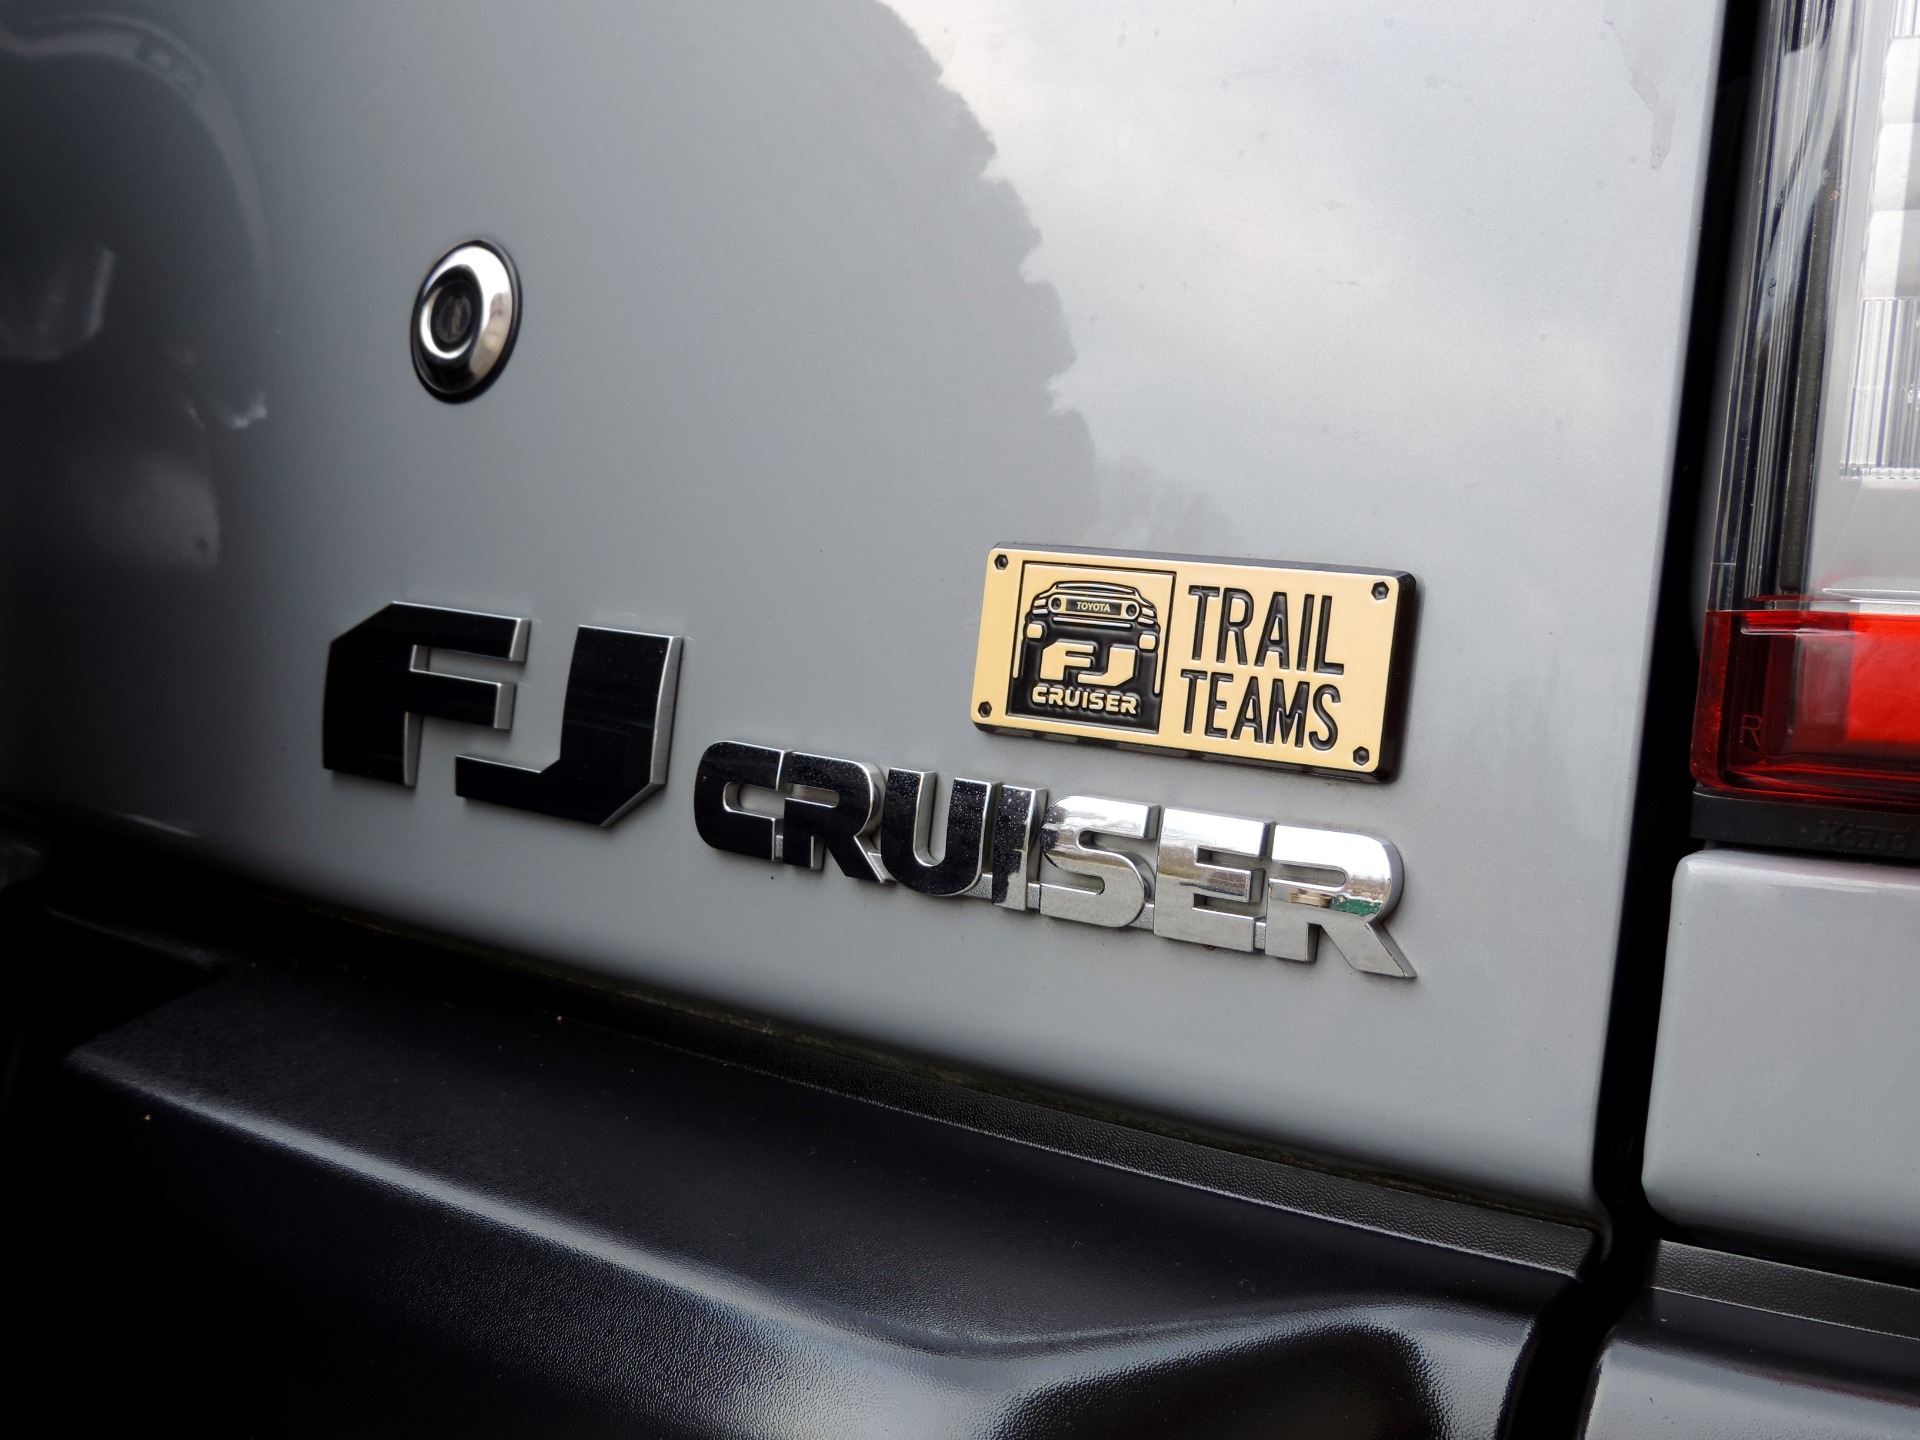 Used Fj Cruiser Trail Teams For Sale